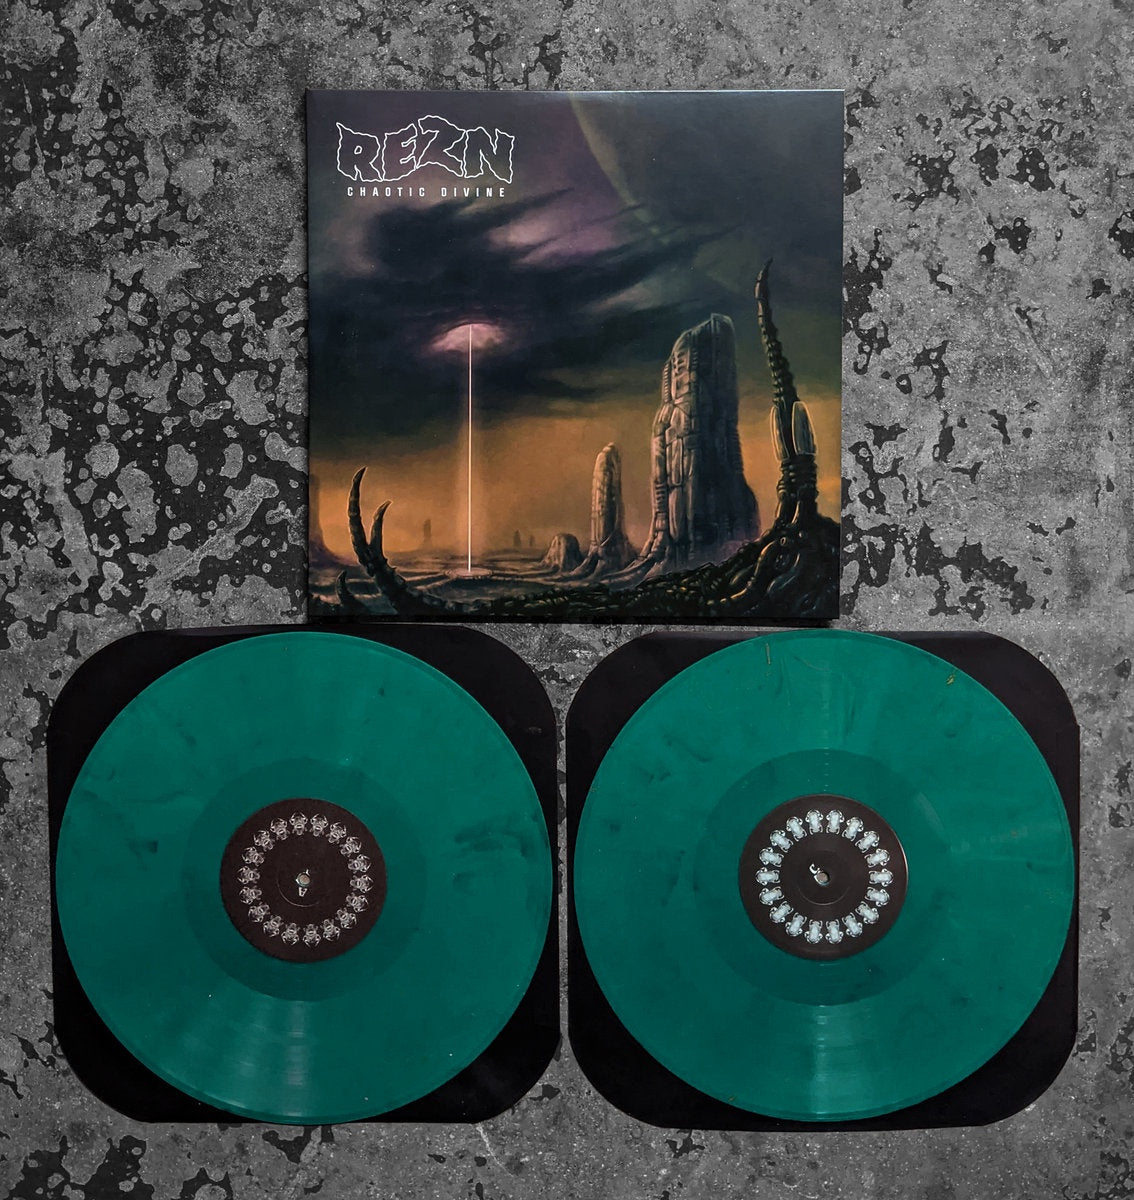 Rezn - Chaotic Divine - New 2 LP Record 2020 Self Released Turquoise Shimmer Vinyl - Chicago Doom Metal / Stoner Rock